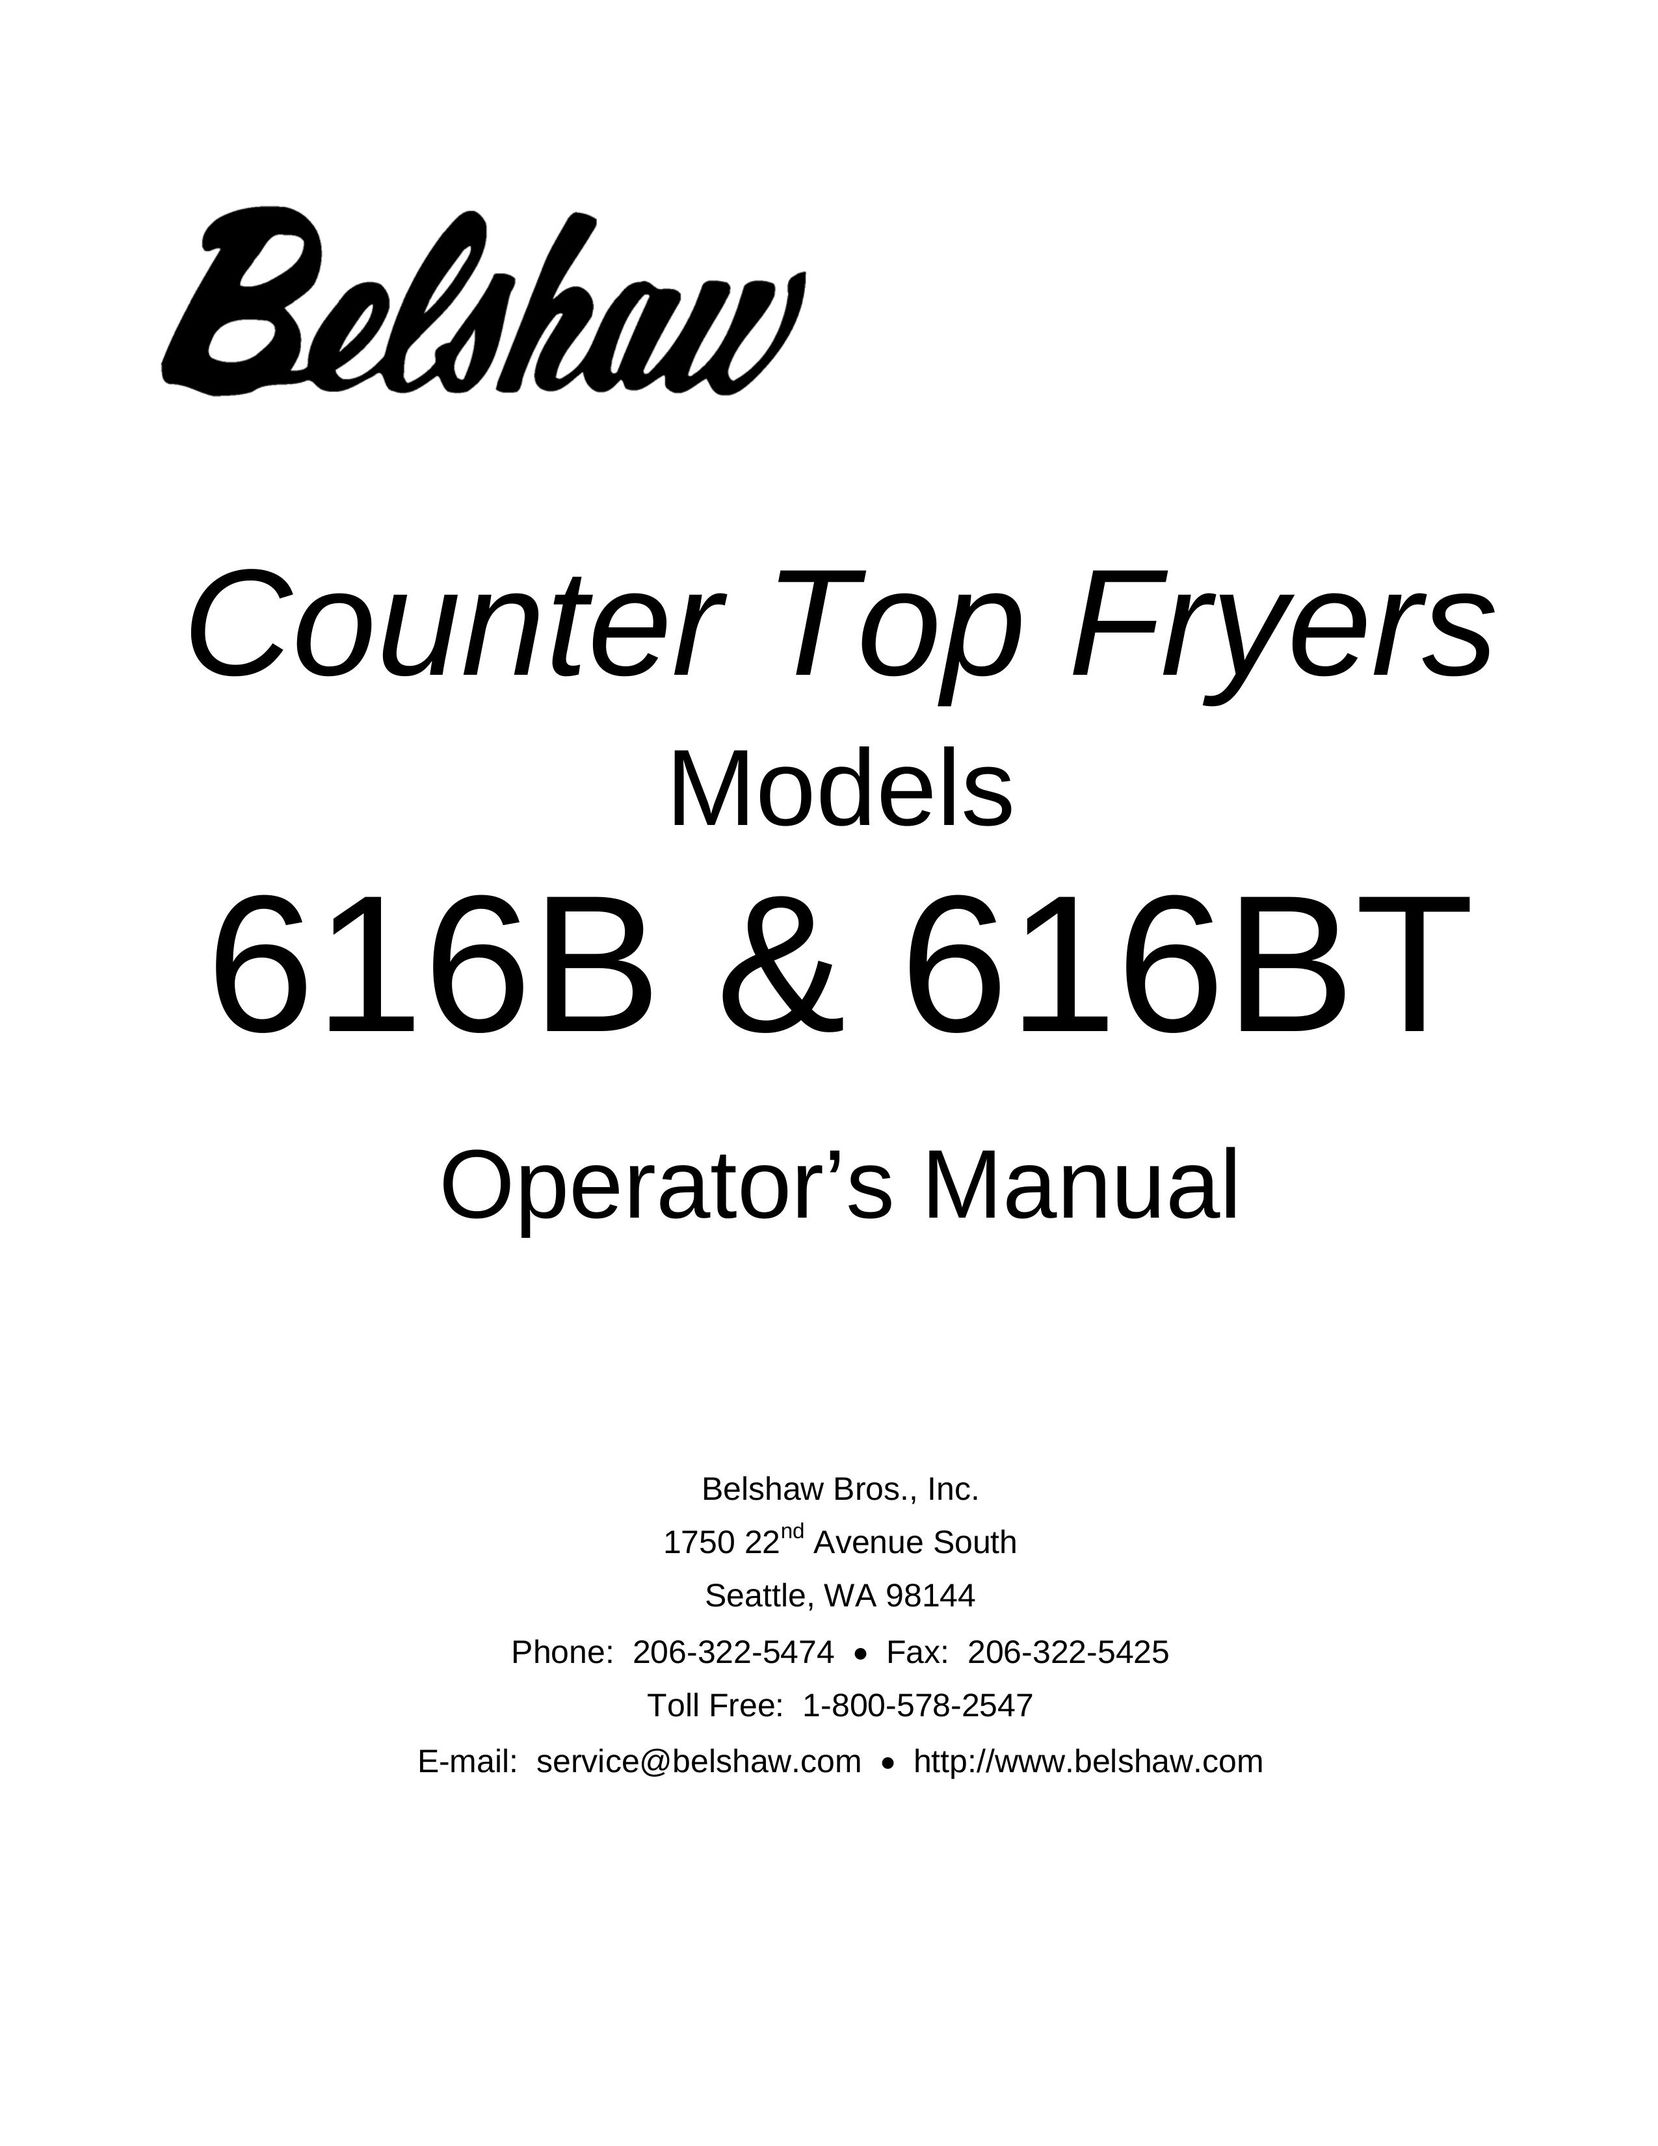 Belshaw Brothers 616BT Fryer User Manual